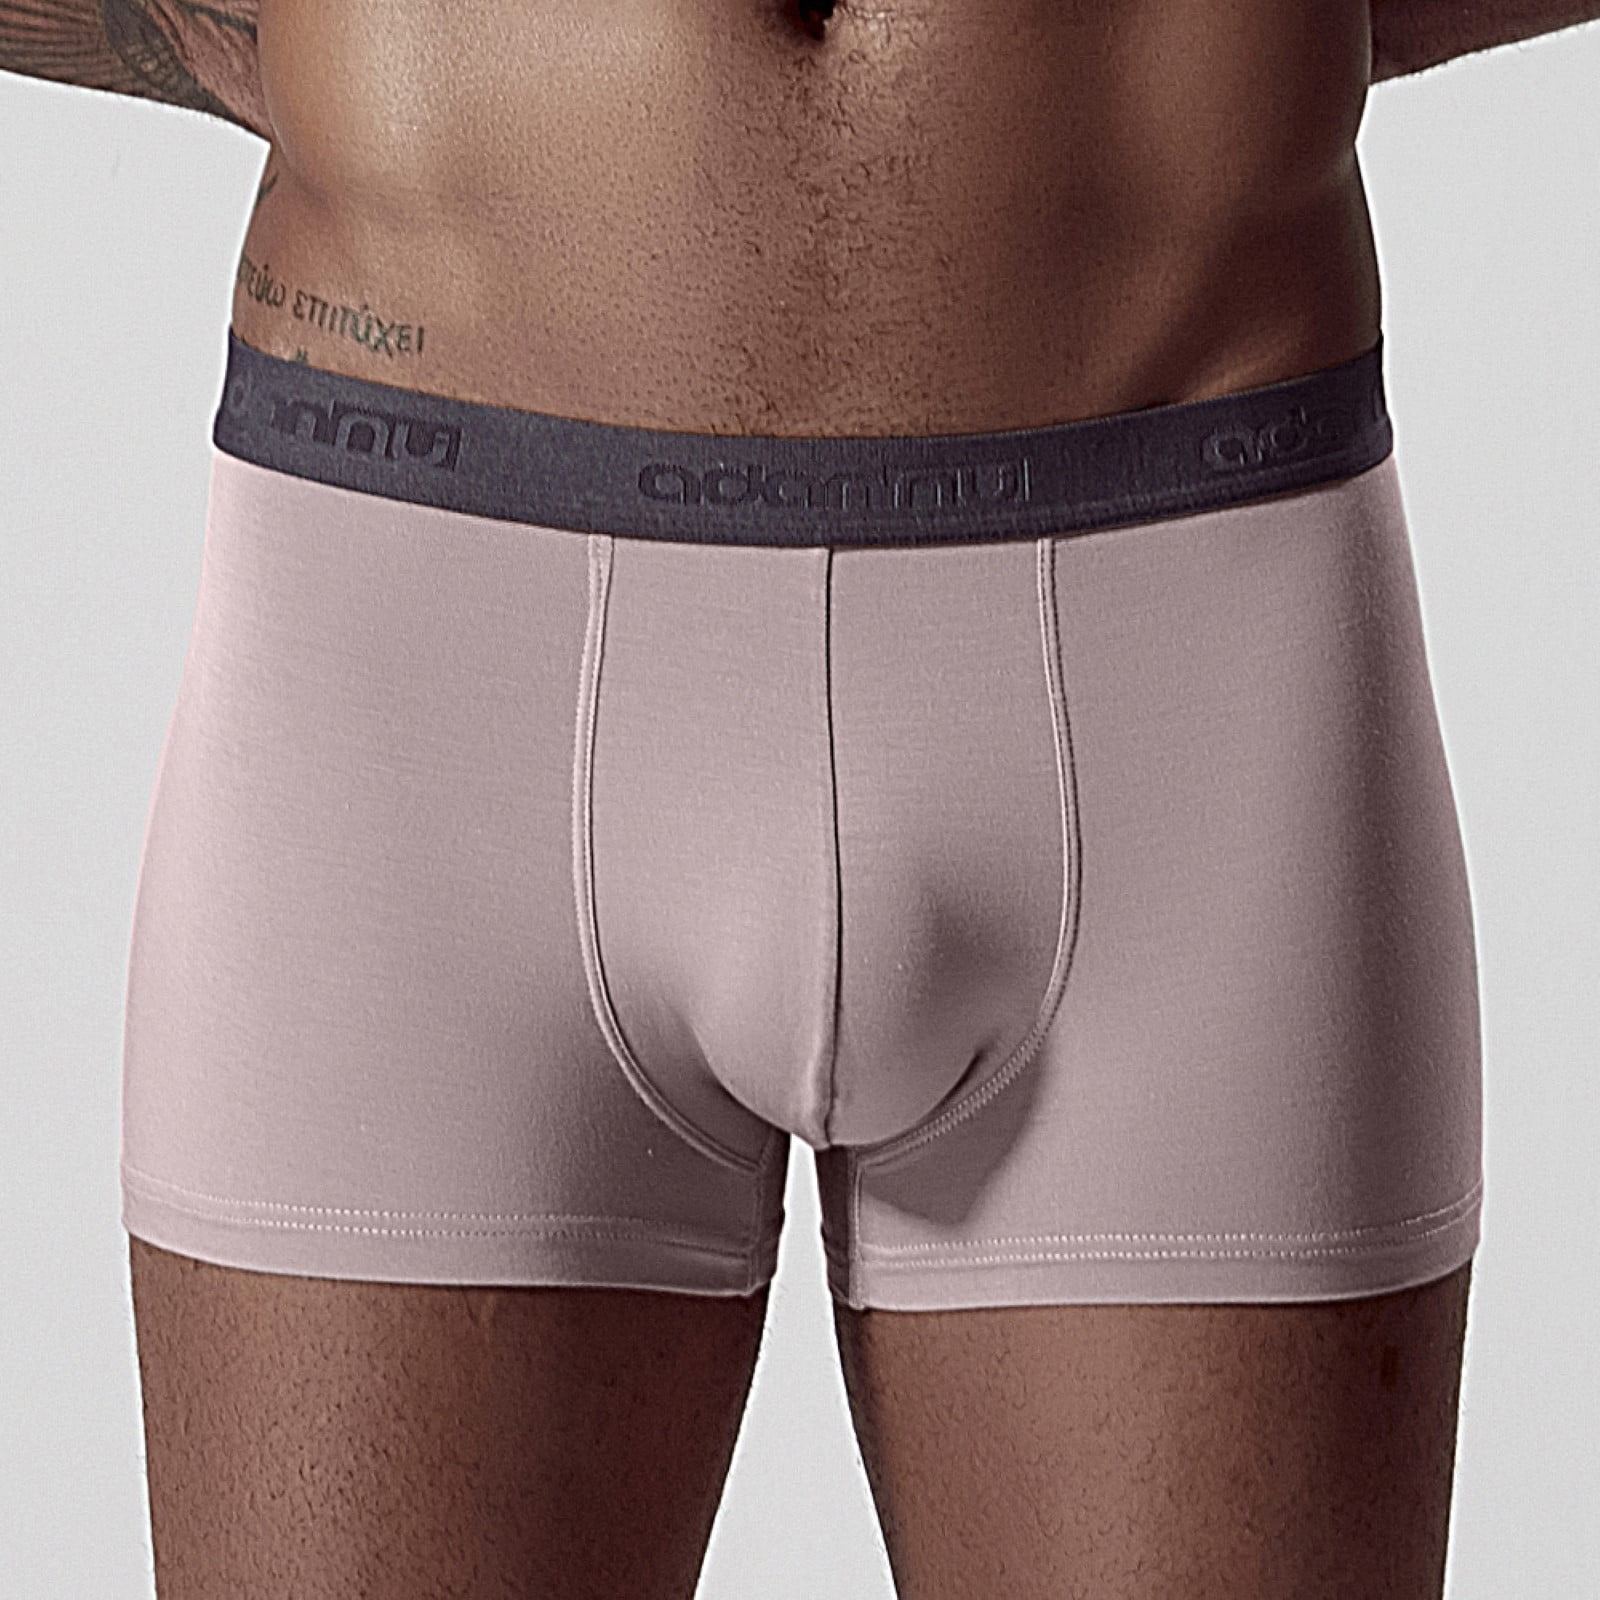 knqrhpse Thongs Thin Men Low-Waisted Underpants T-Back Underwear